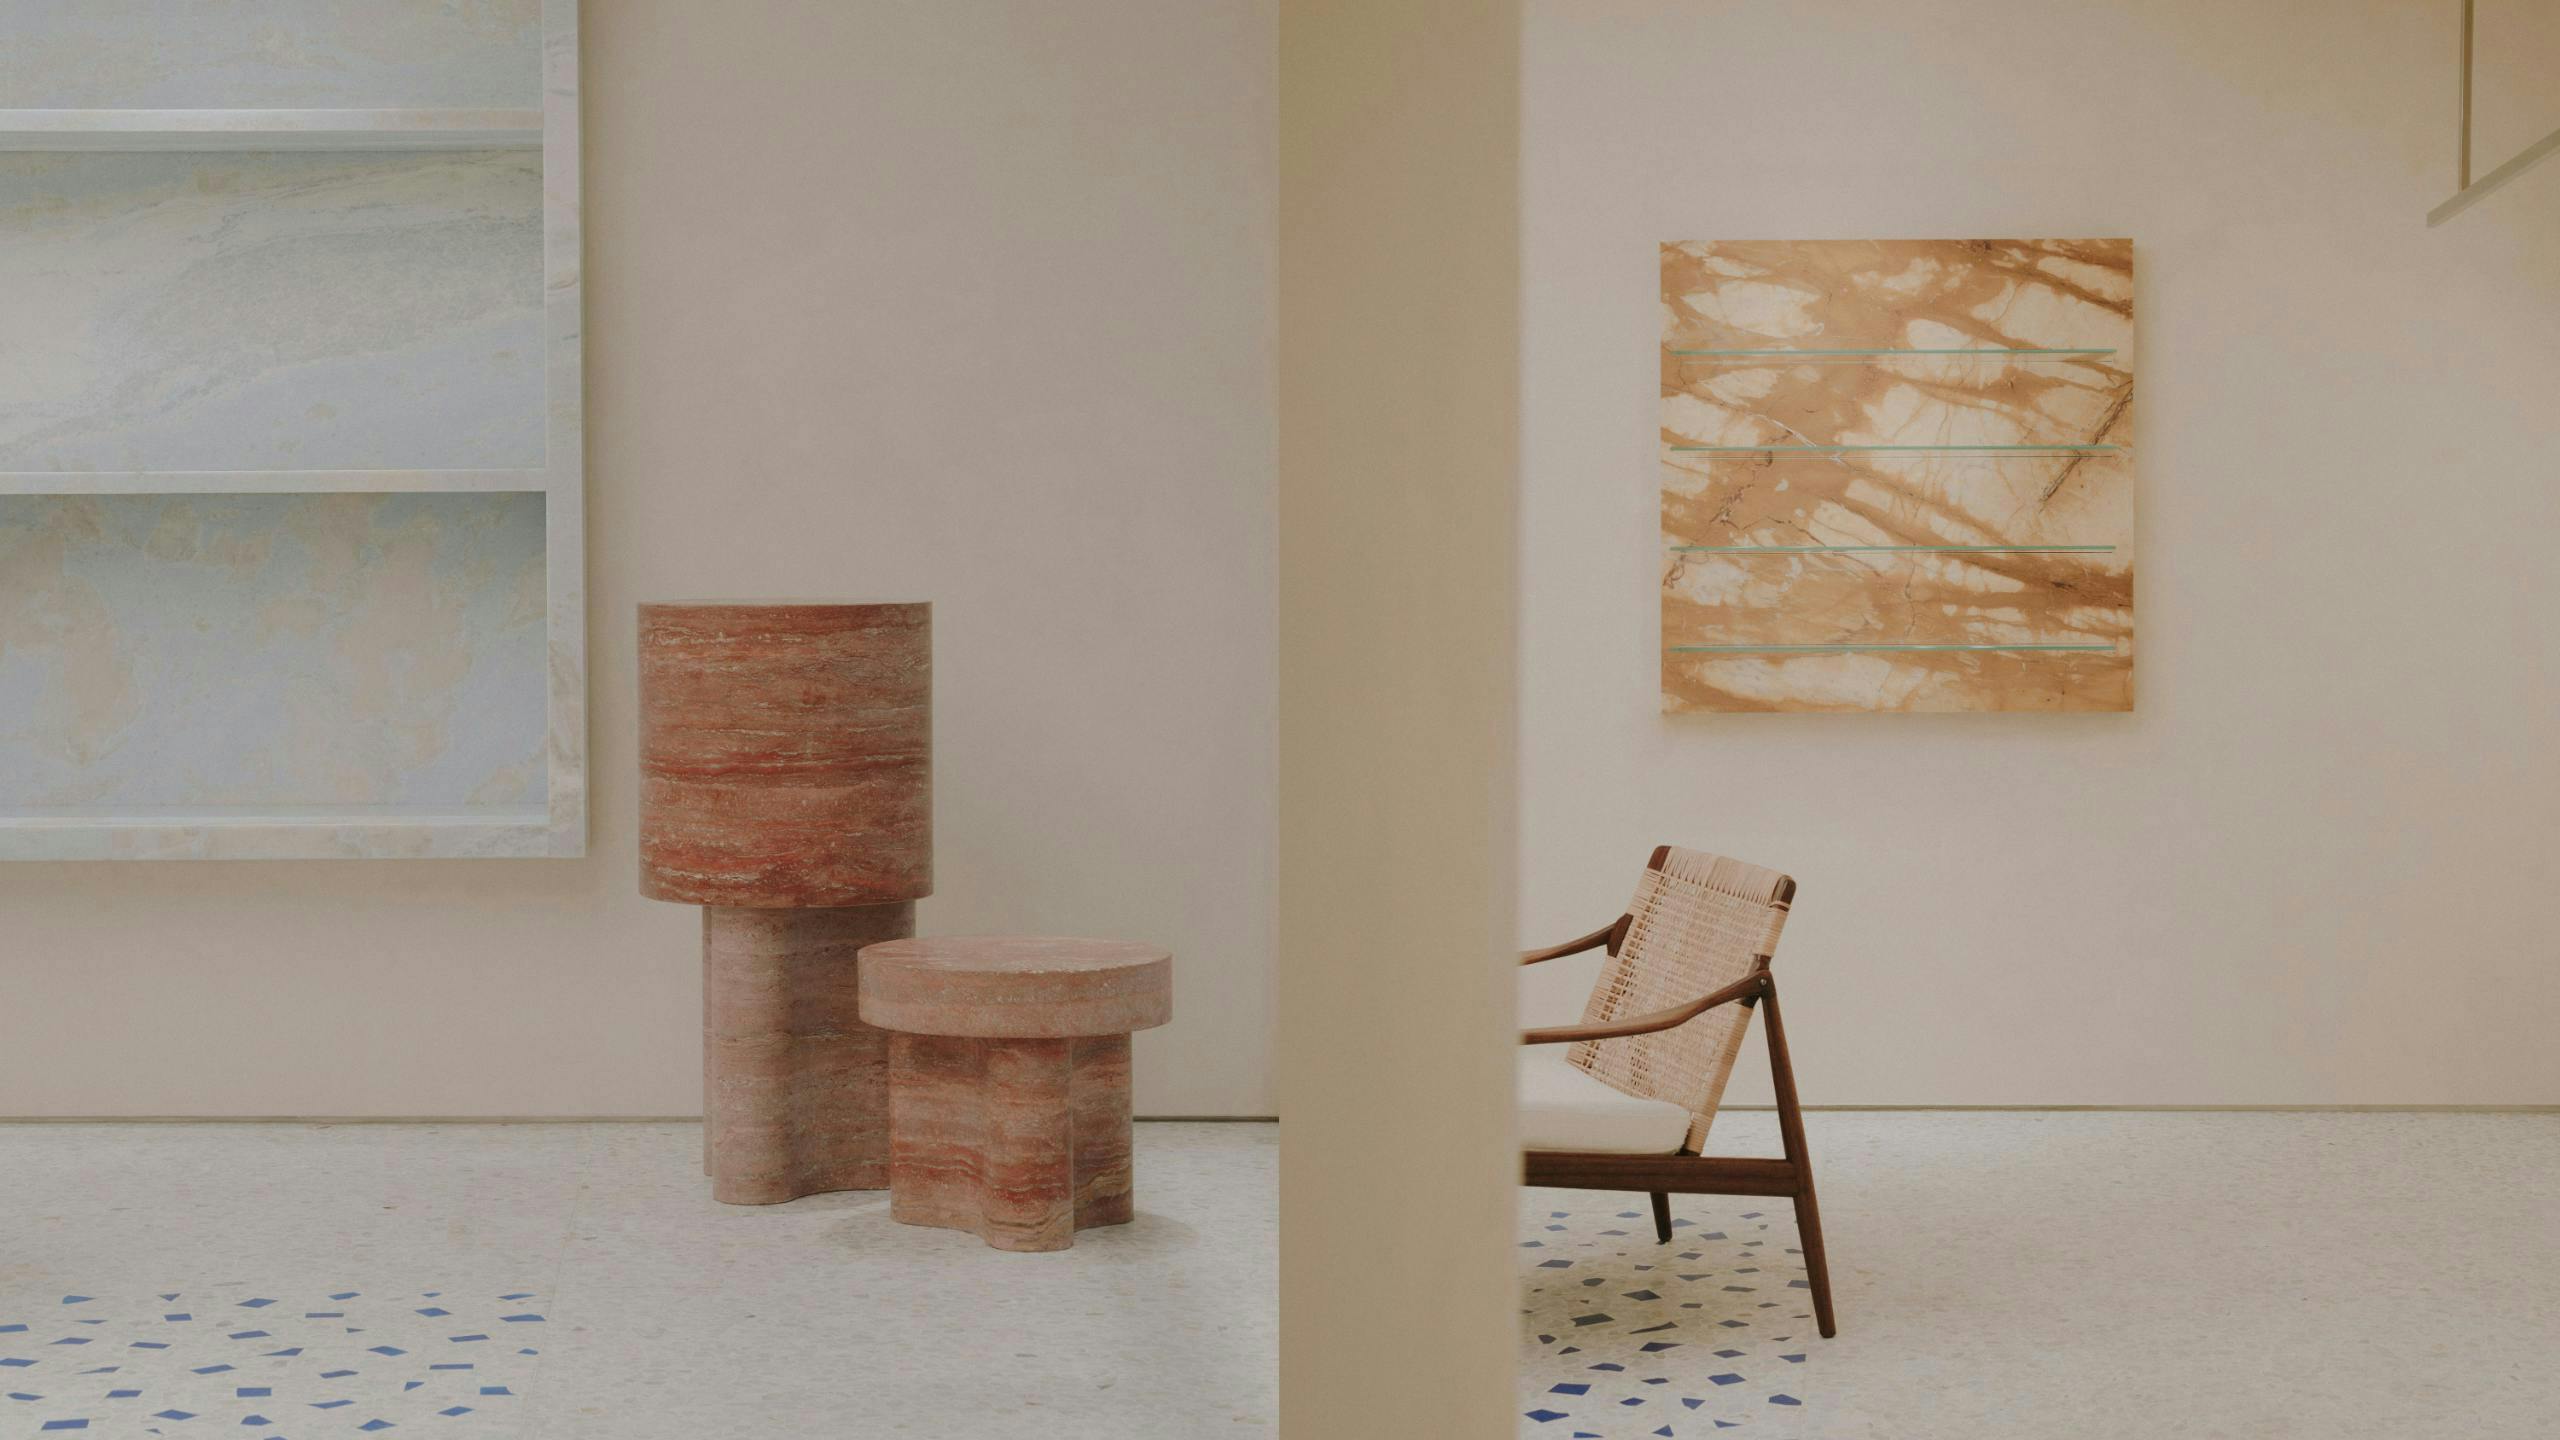 floor flooring plywood wood chair furniture indoors interior design building wall